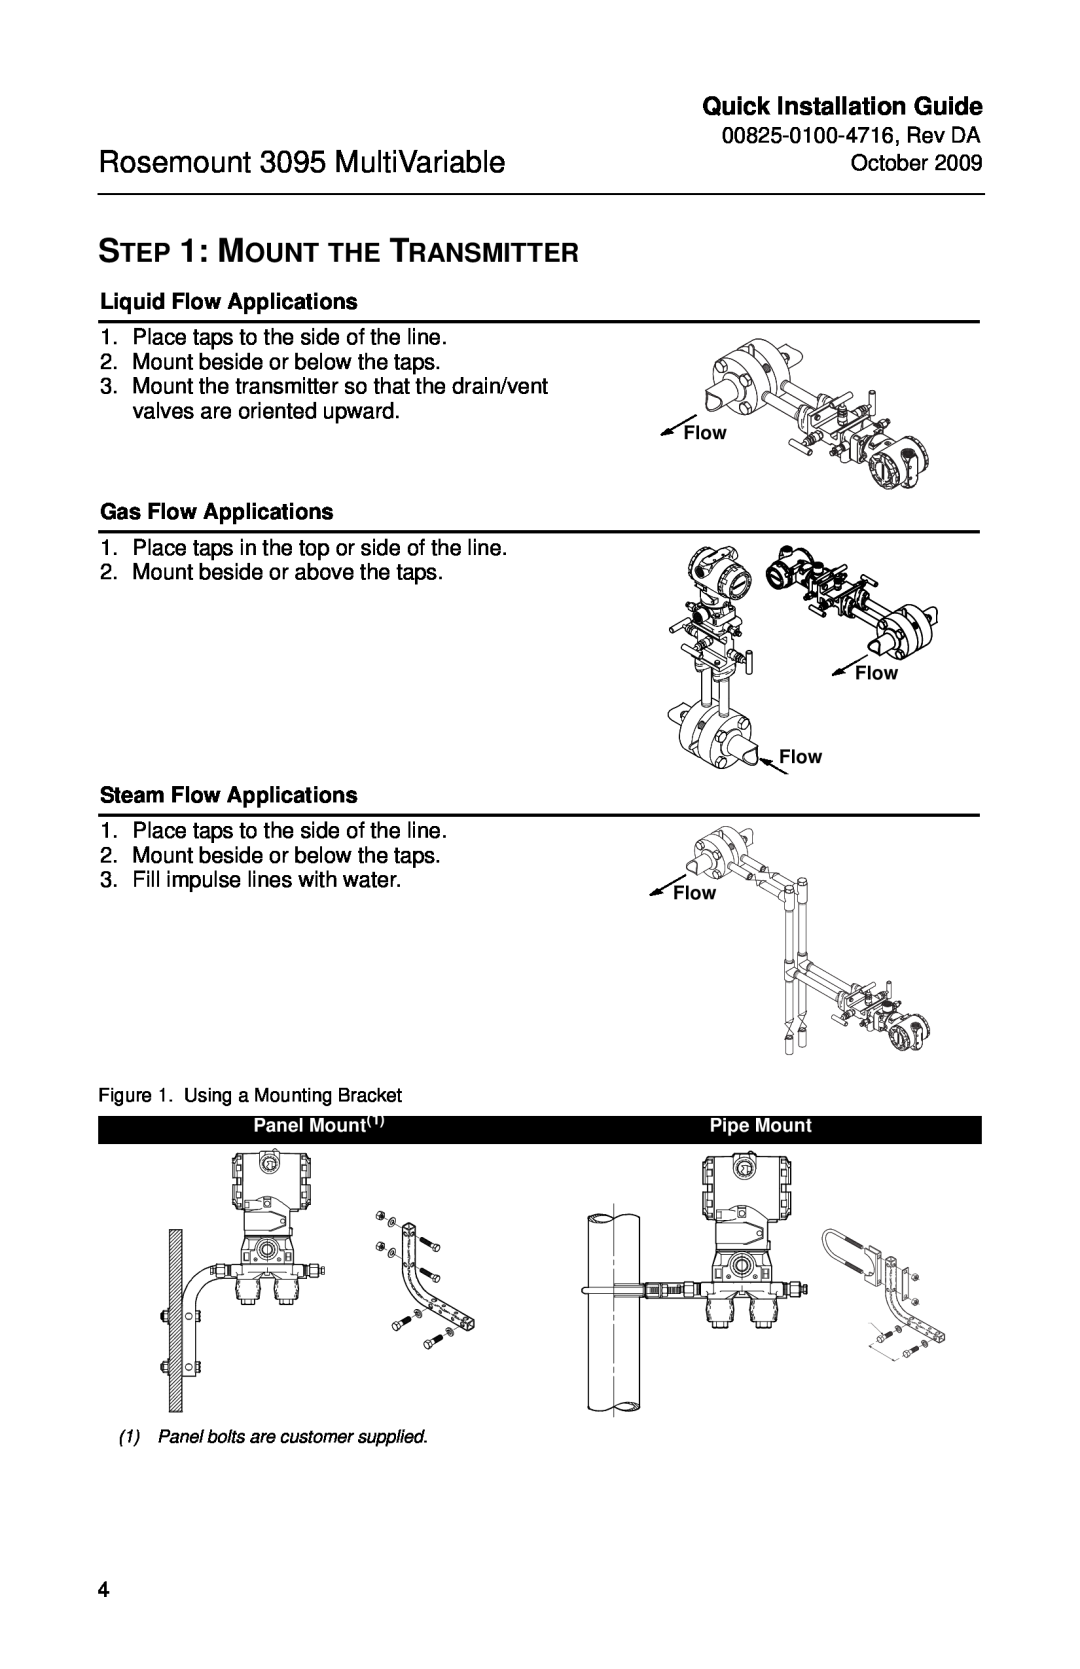 Emerson 3095 manual Mount The Transmitter, Liquid Flow Applications, Gas Flow Applications, Steam Flow Applications 